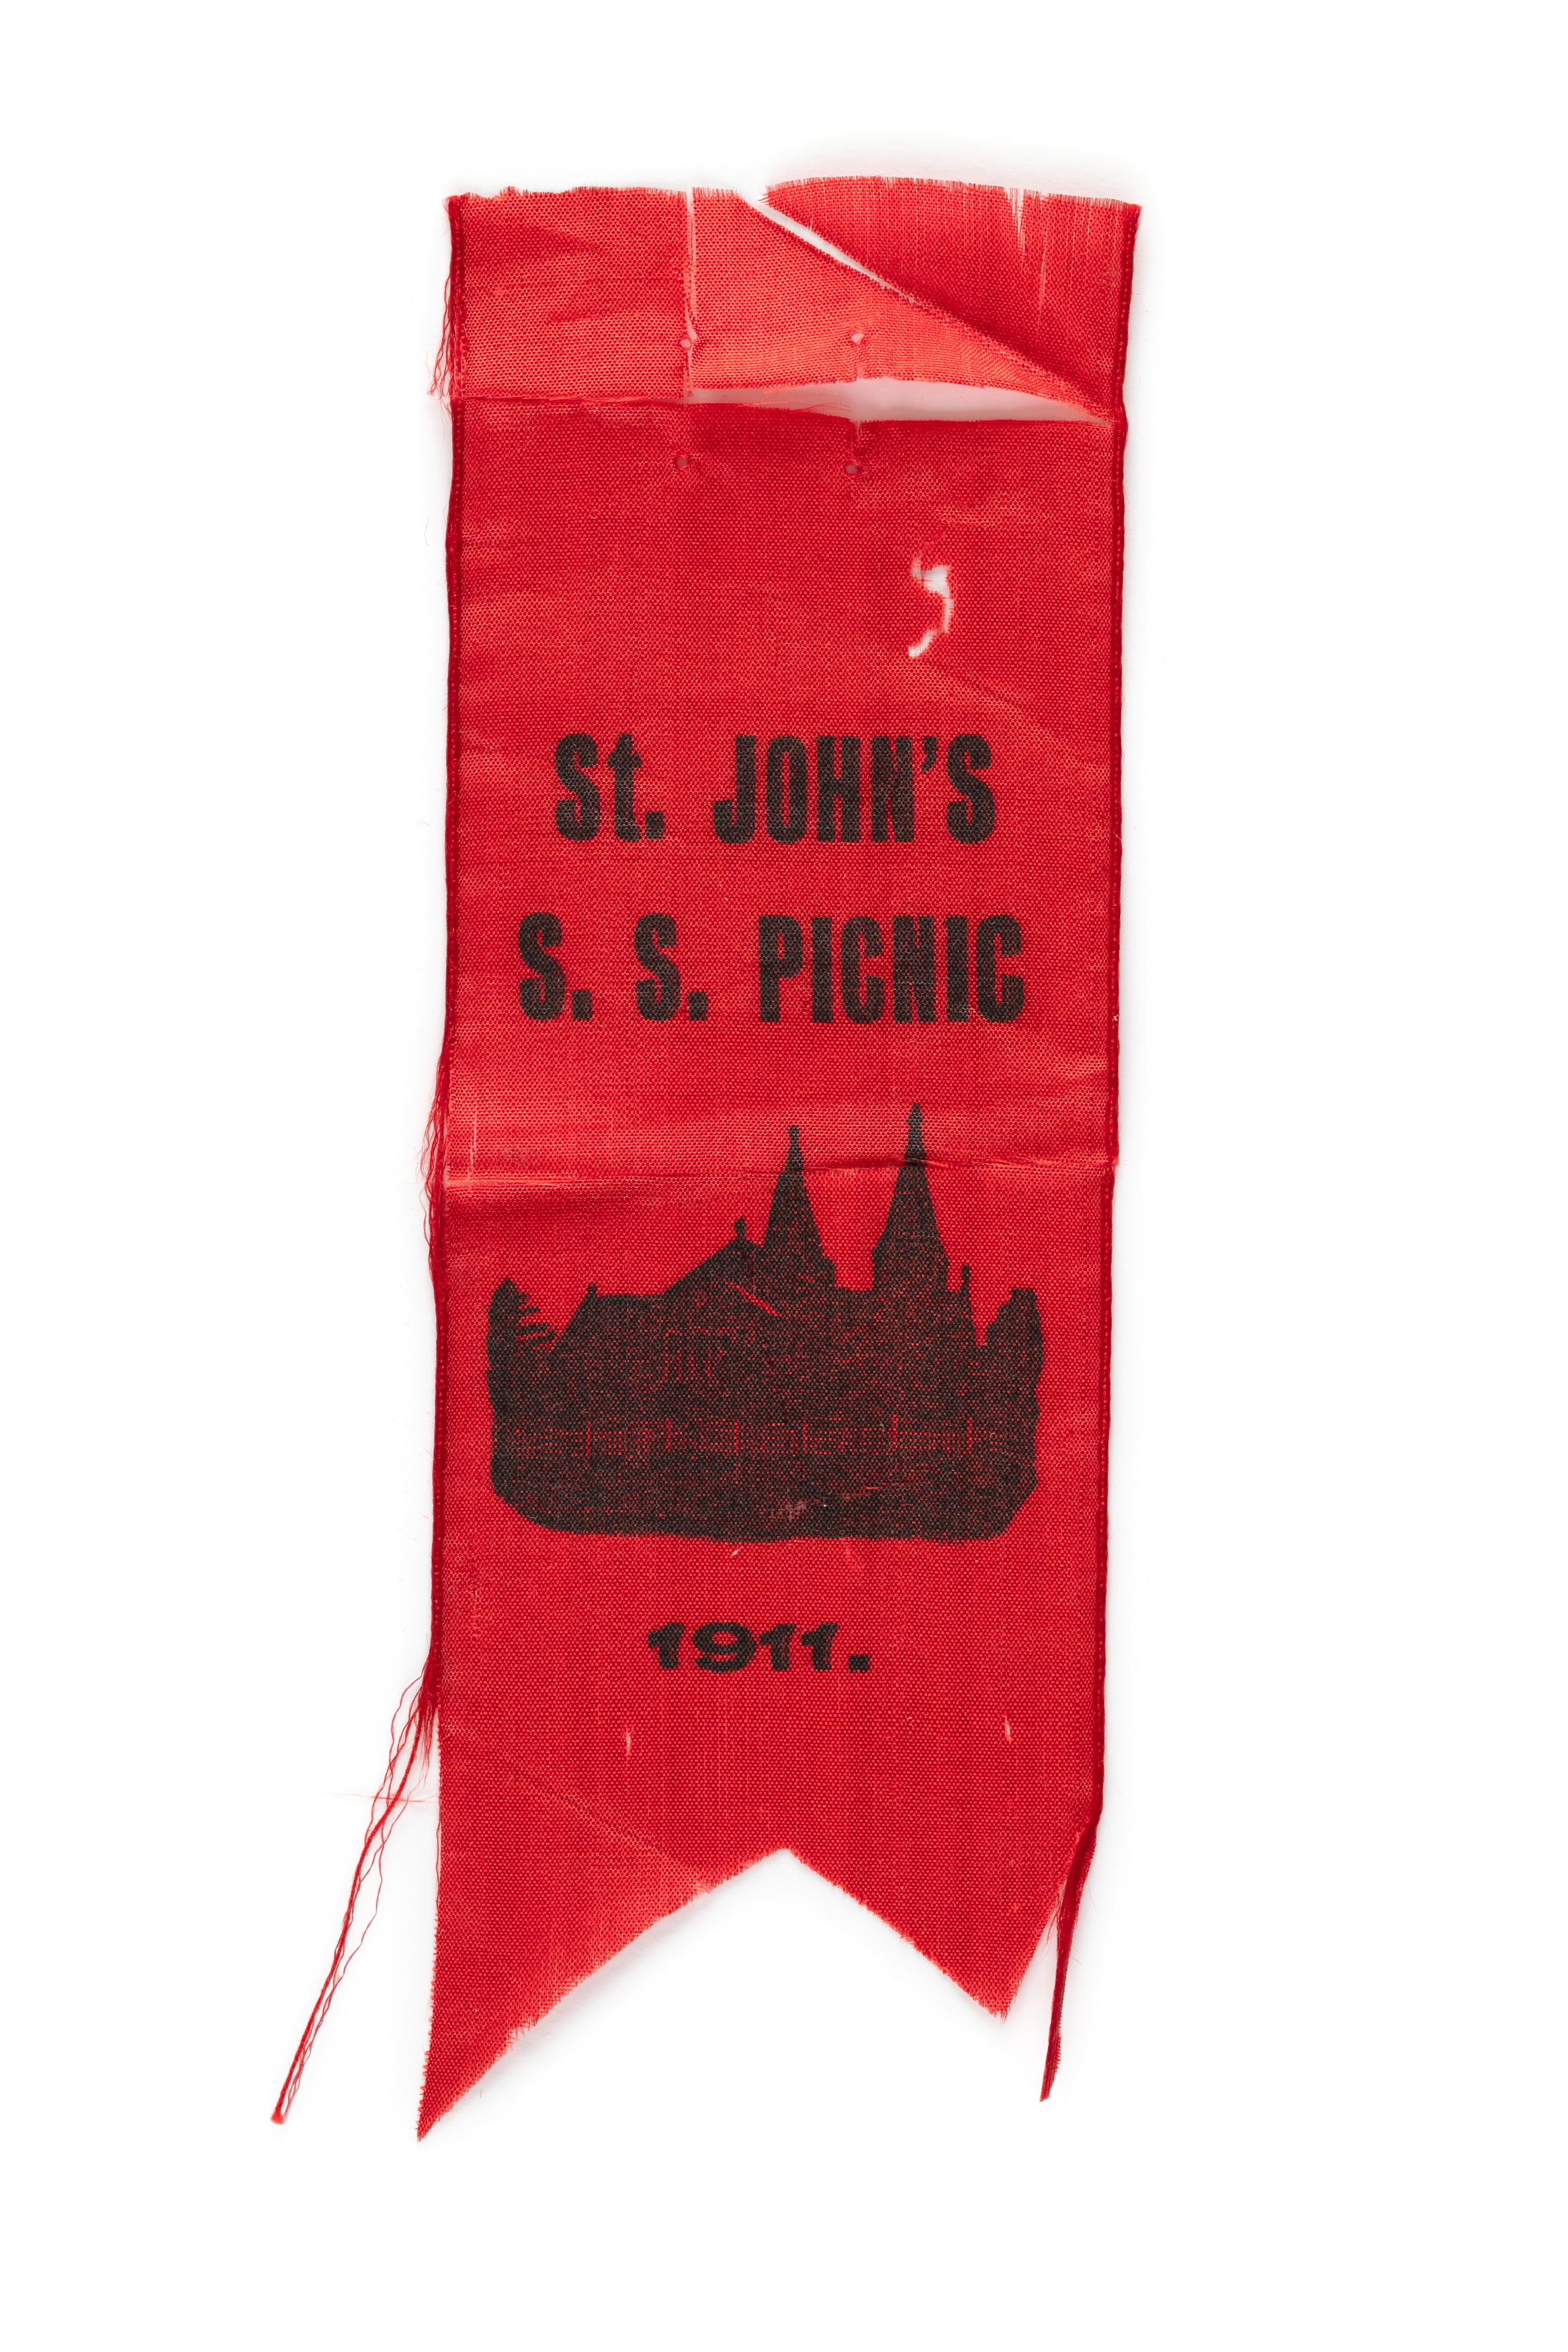 Ribbon commemorating St Johns Sunday School Picnic